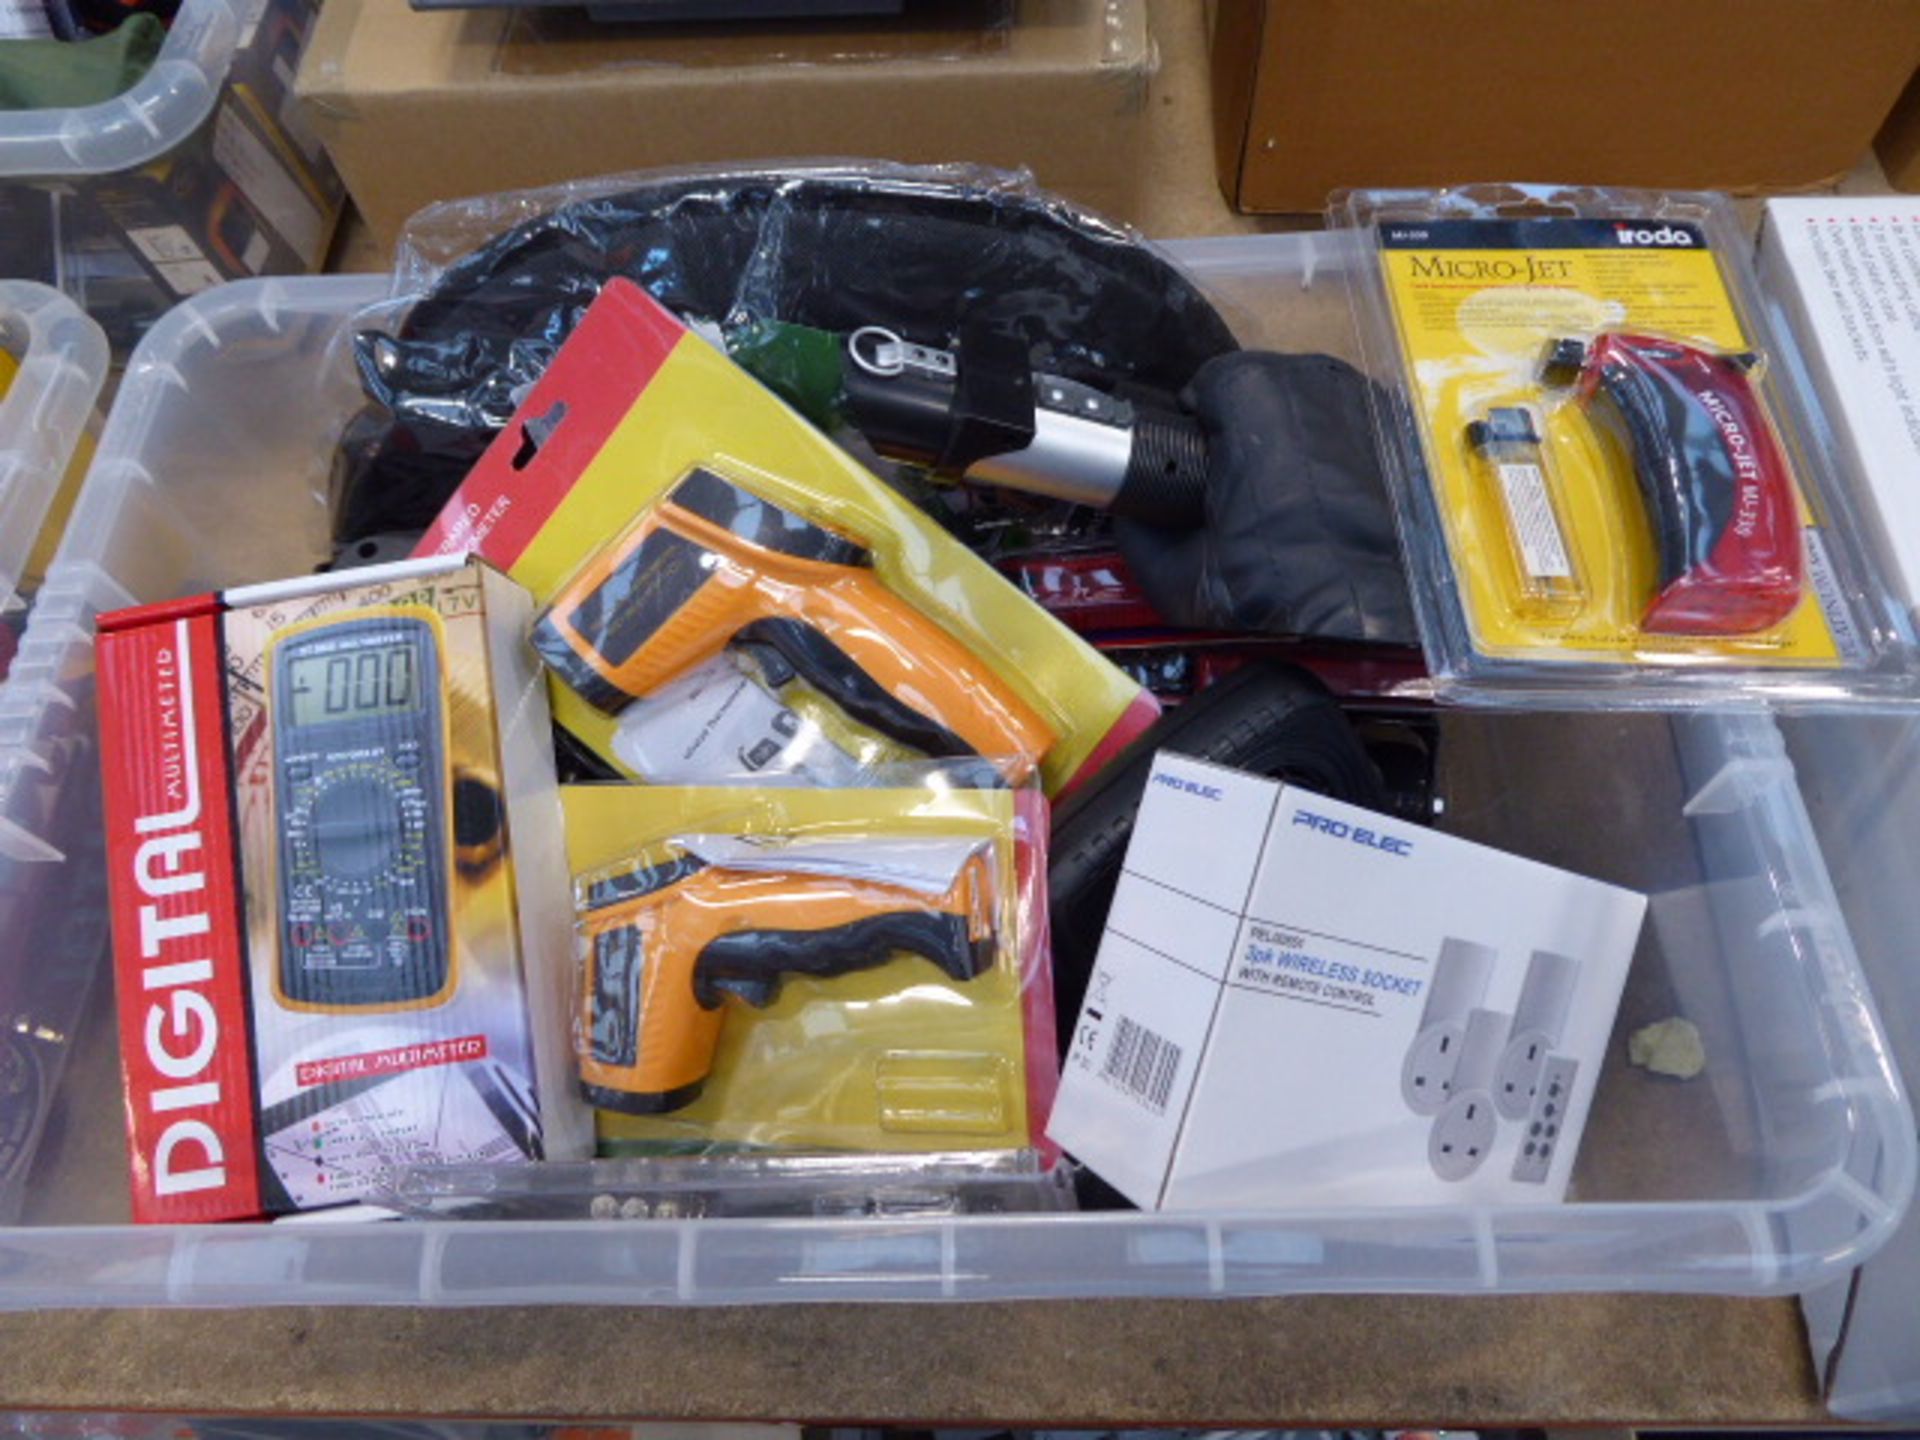 Plastic crate containing digital multimeter, infrared thermometers, mini screwdrivers, castors,